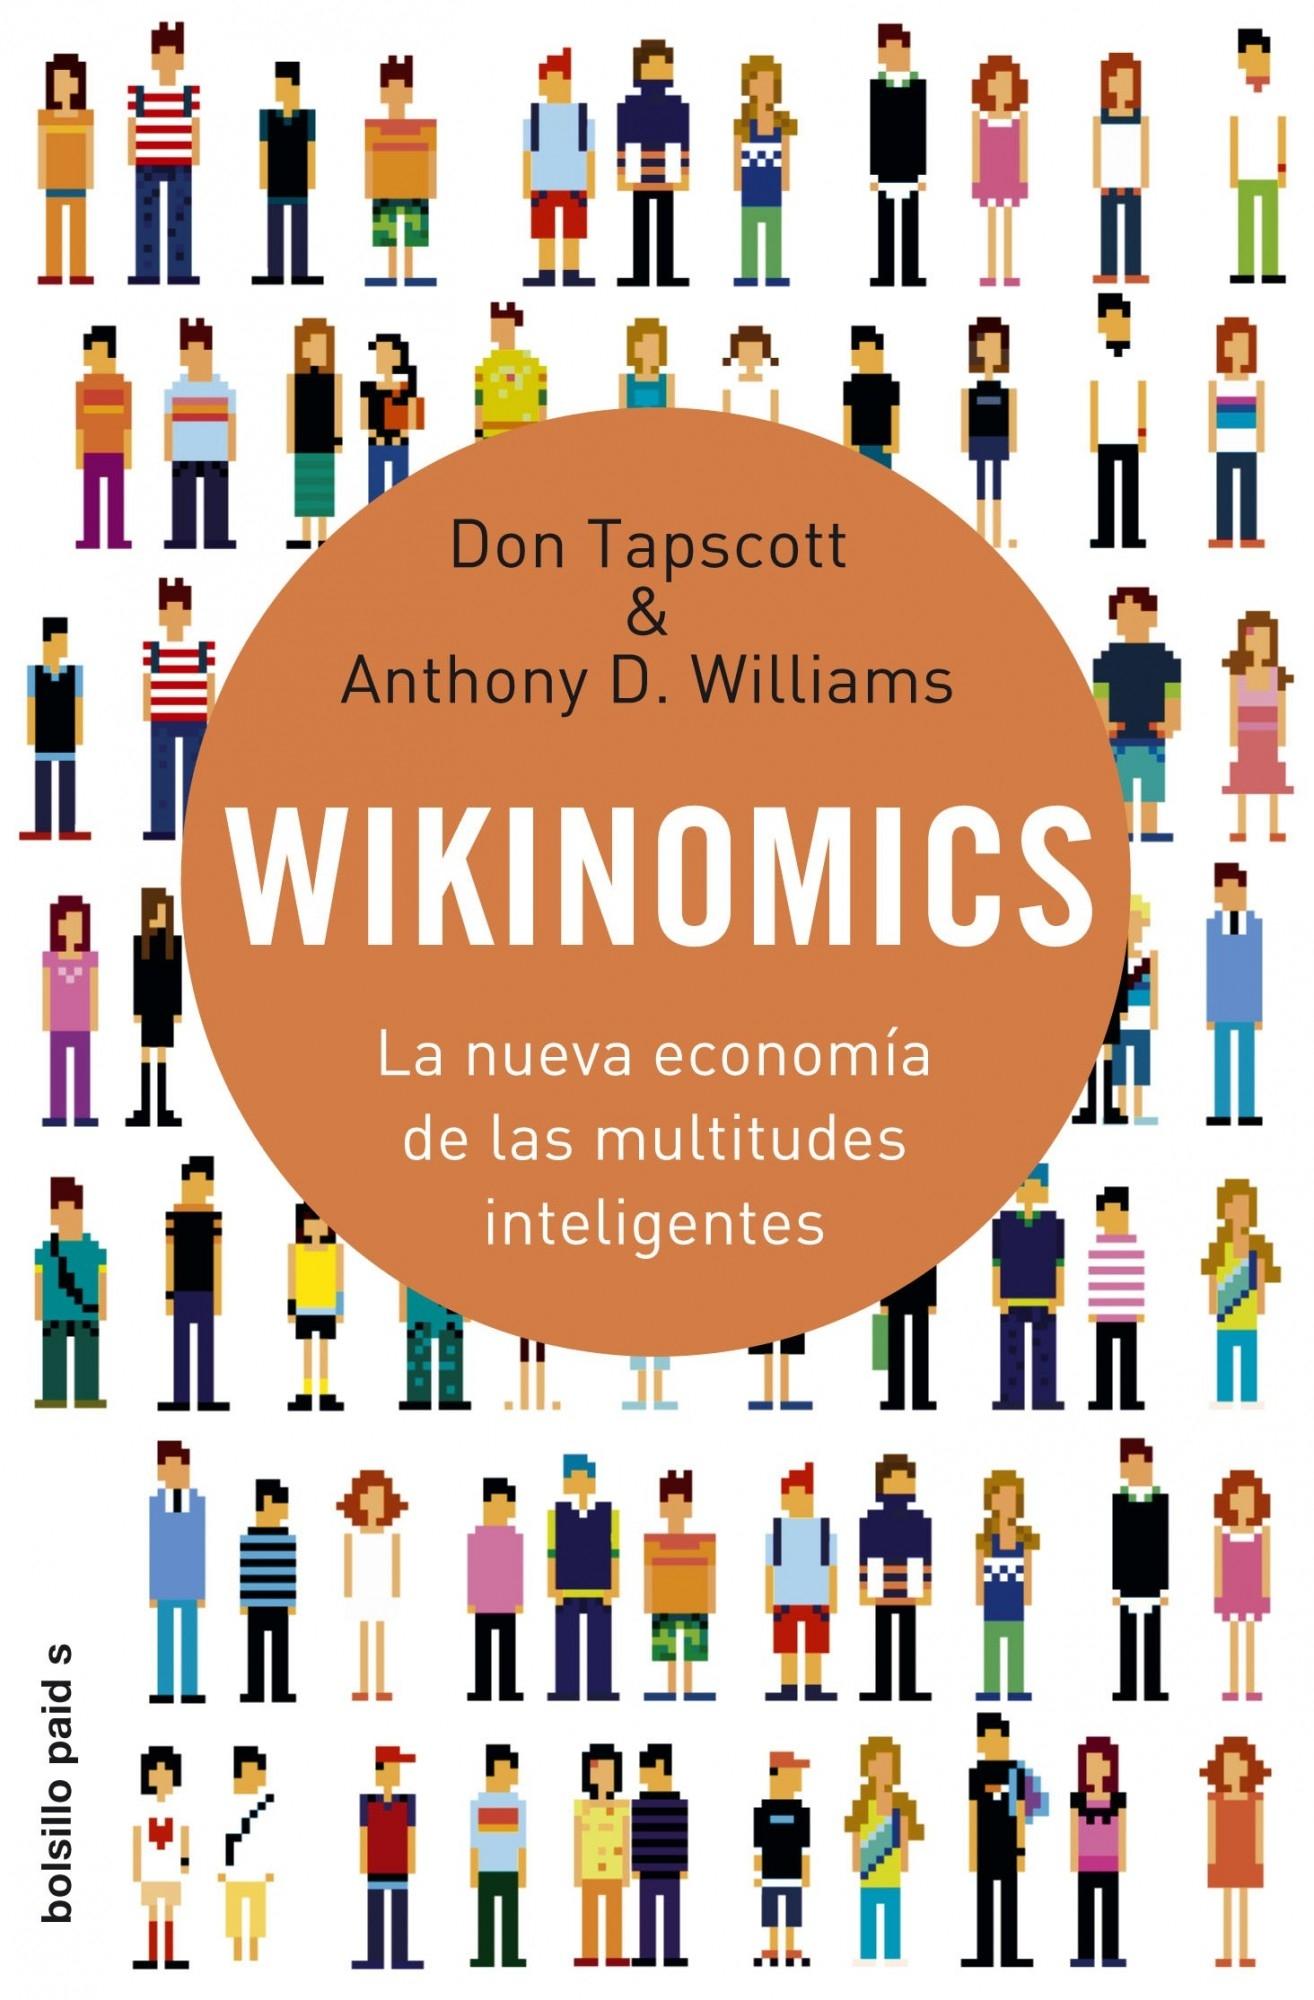 Wikinomics "La nueva economía de las multitudes inteligentes"